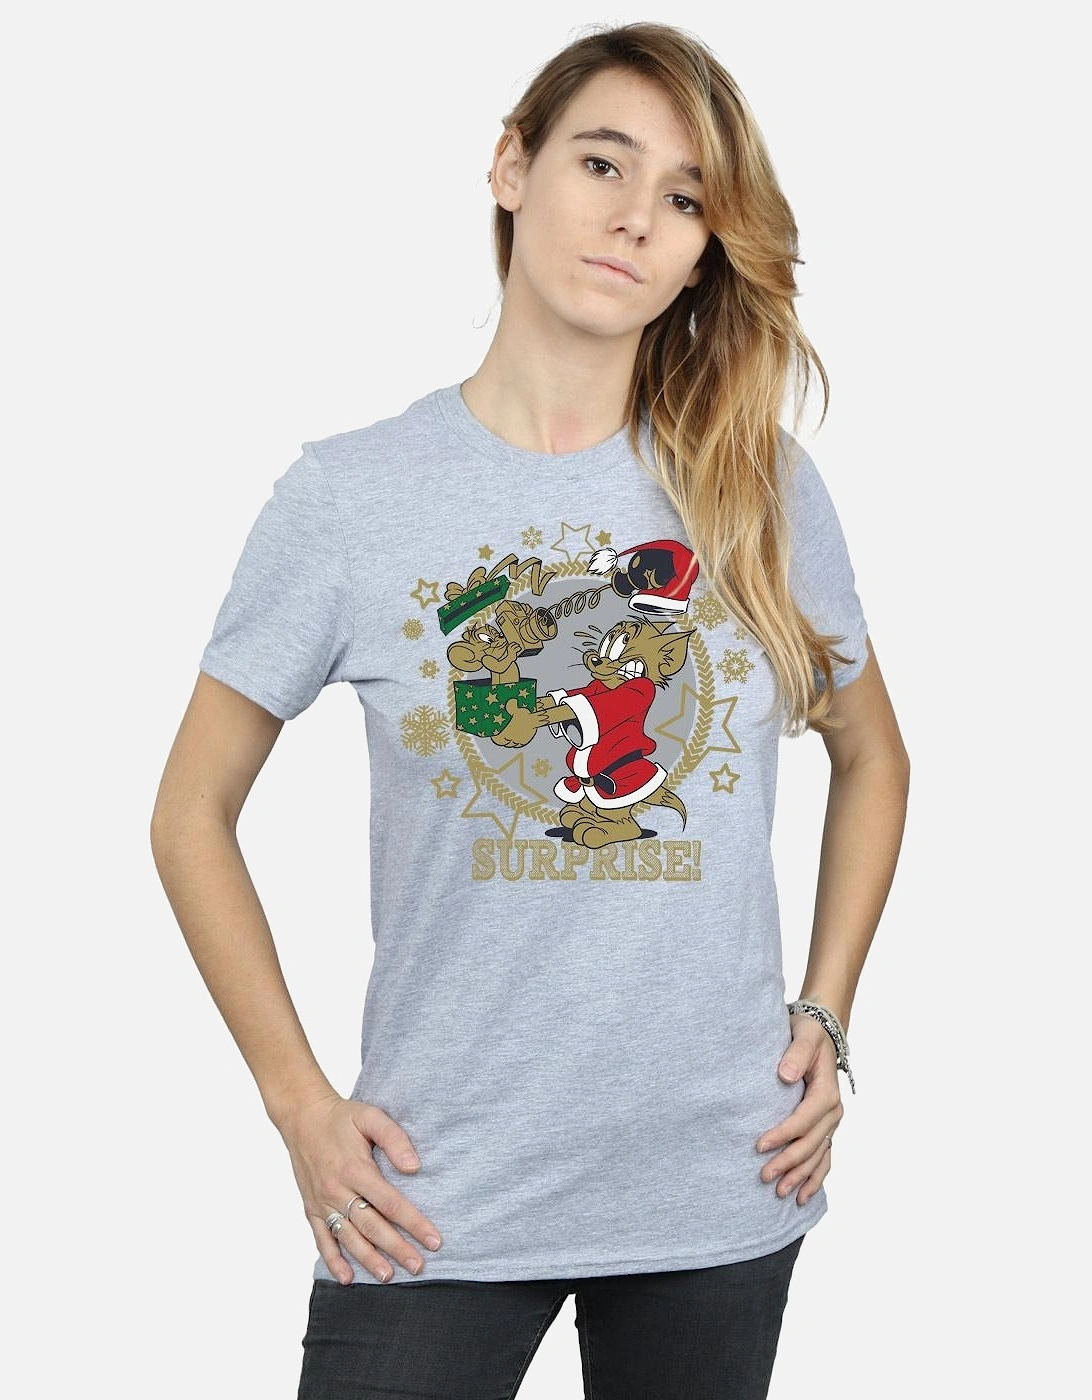 Tom And Jerry Womens/Ladies Christmas Surprise Cotton Boyfriend T-Shirt